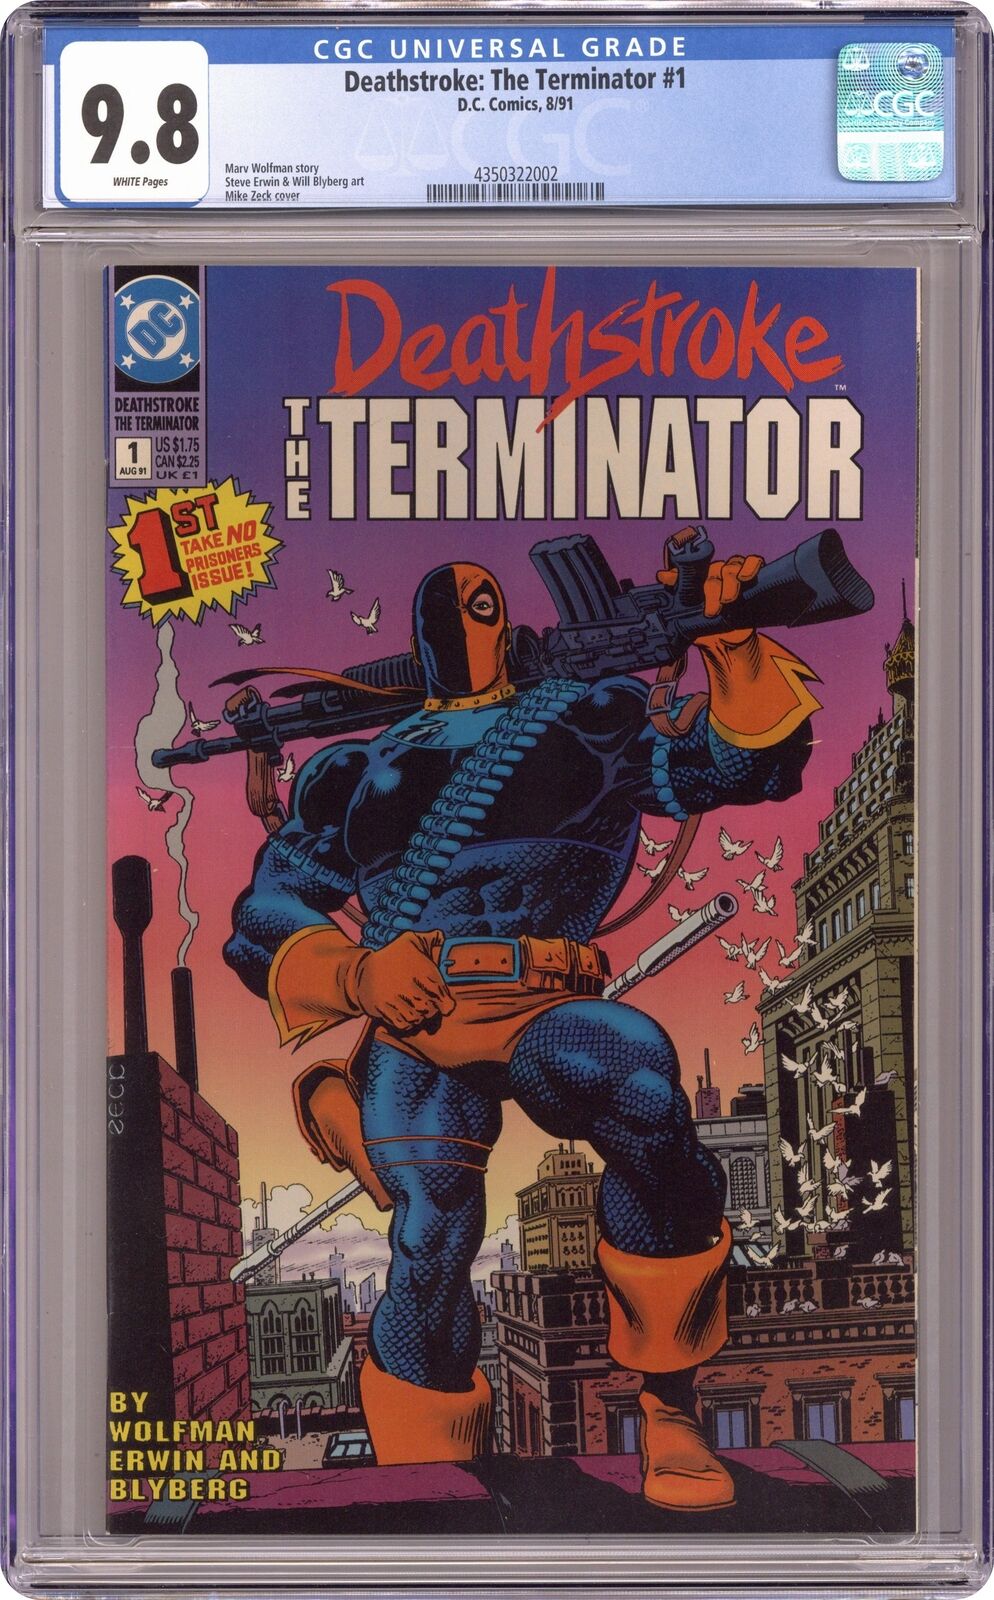 Deathstroke the Terminator #1 CGC 9.8 1991 4350322002